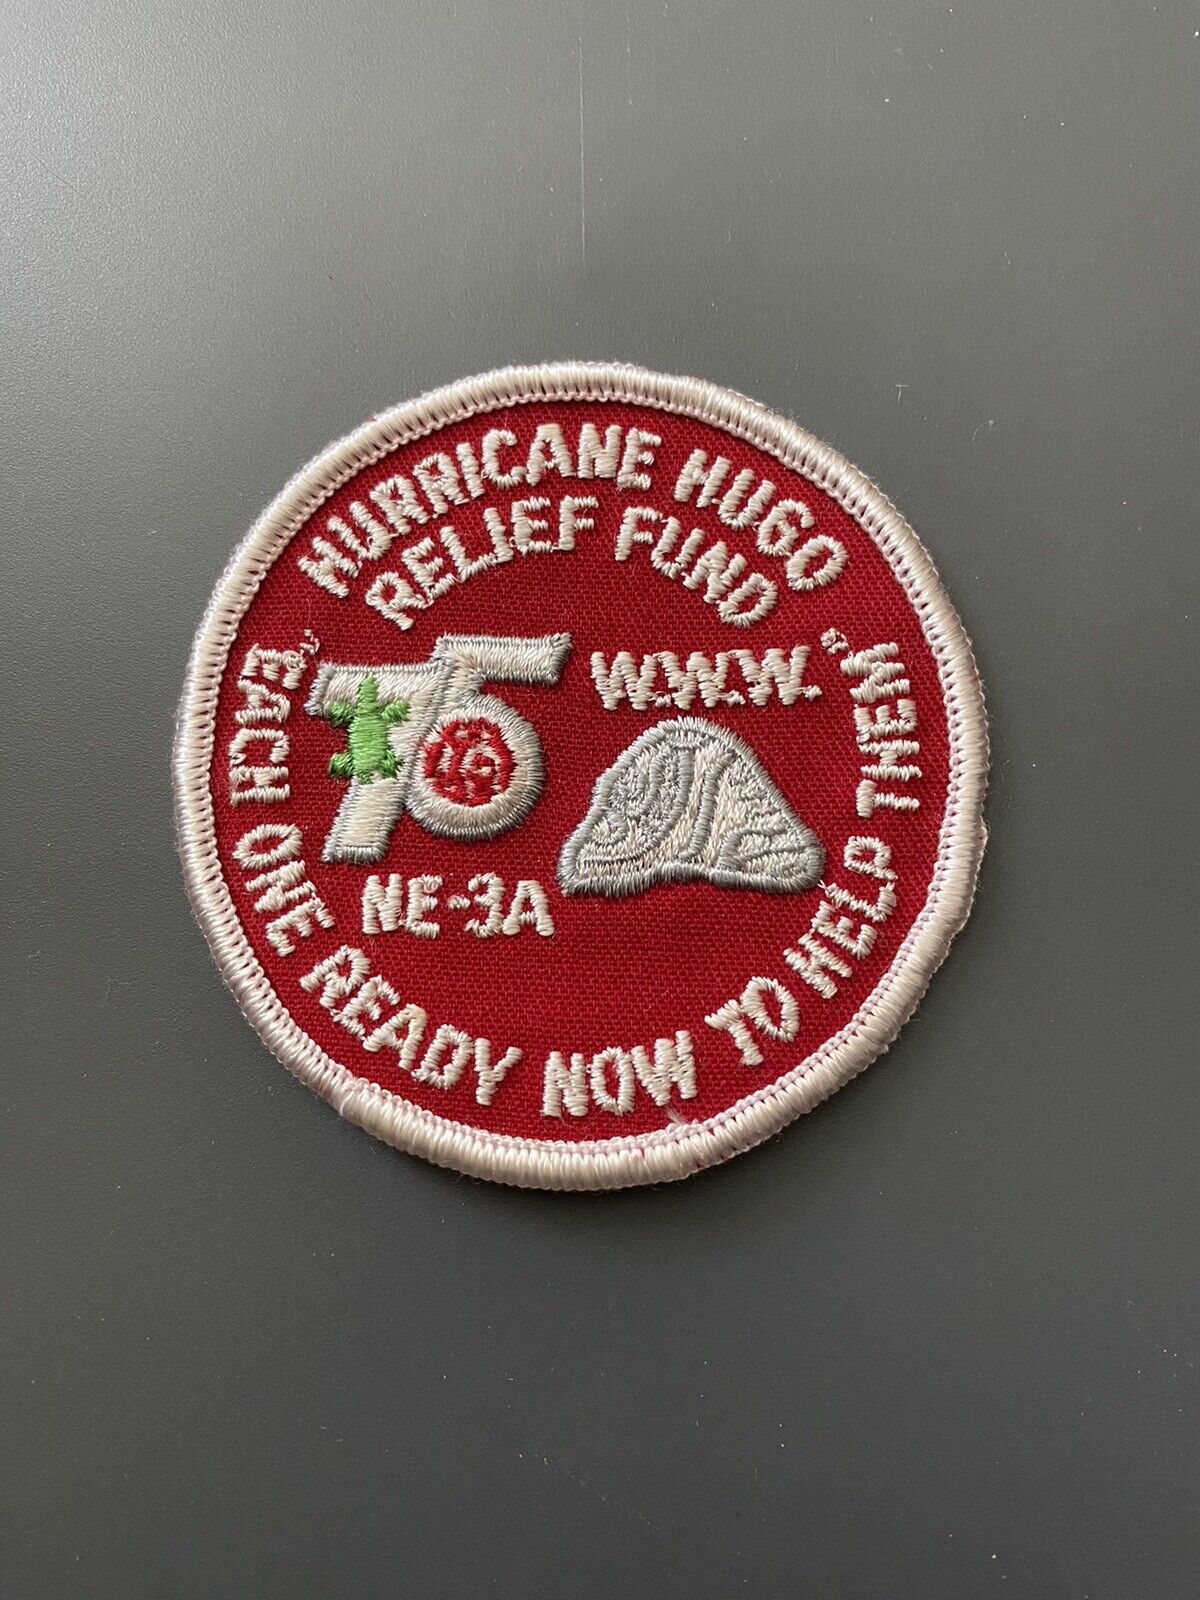 1990 Section NE-3A Hurricane Hugo Relief Fund Pocket Patch